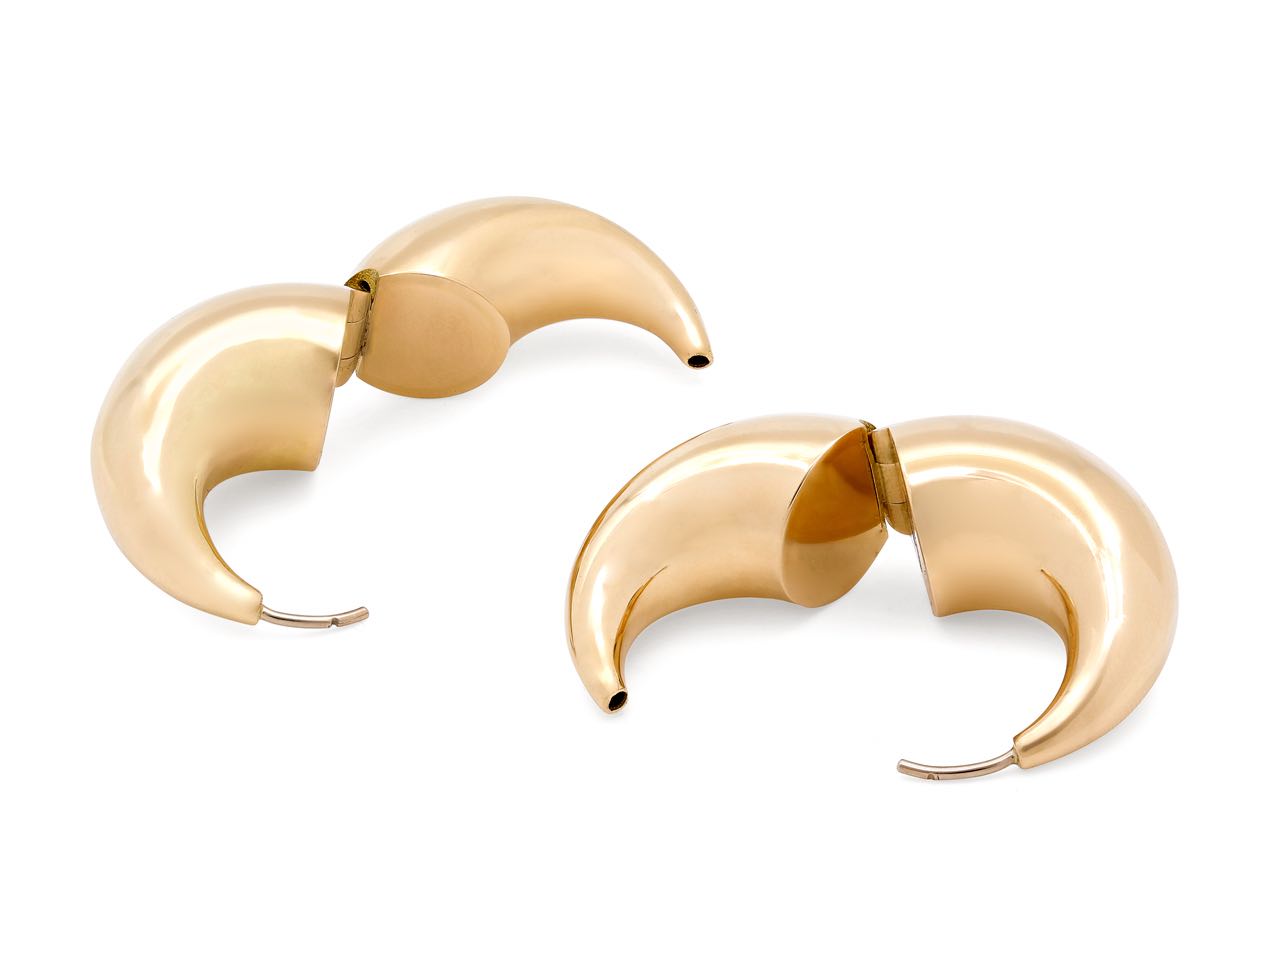 Crescent Hoop Earrings in 18K Gold, Large, by Beladora